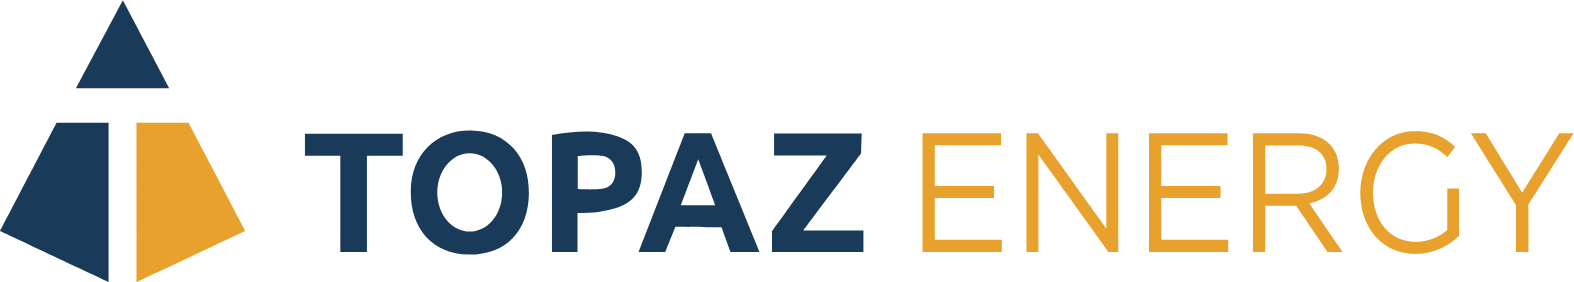 Topaz Energy logo large (transparent PNG)